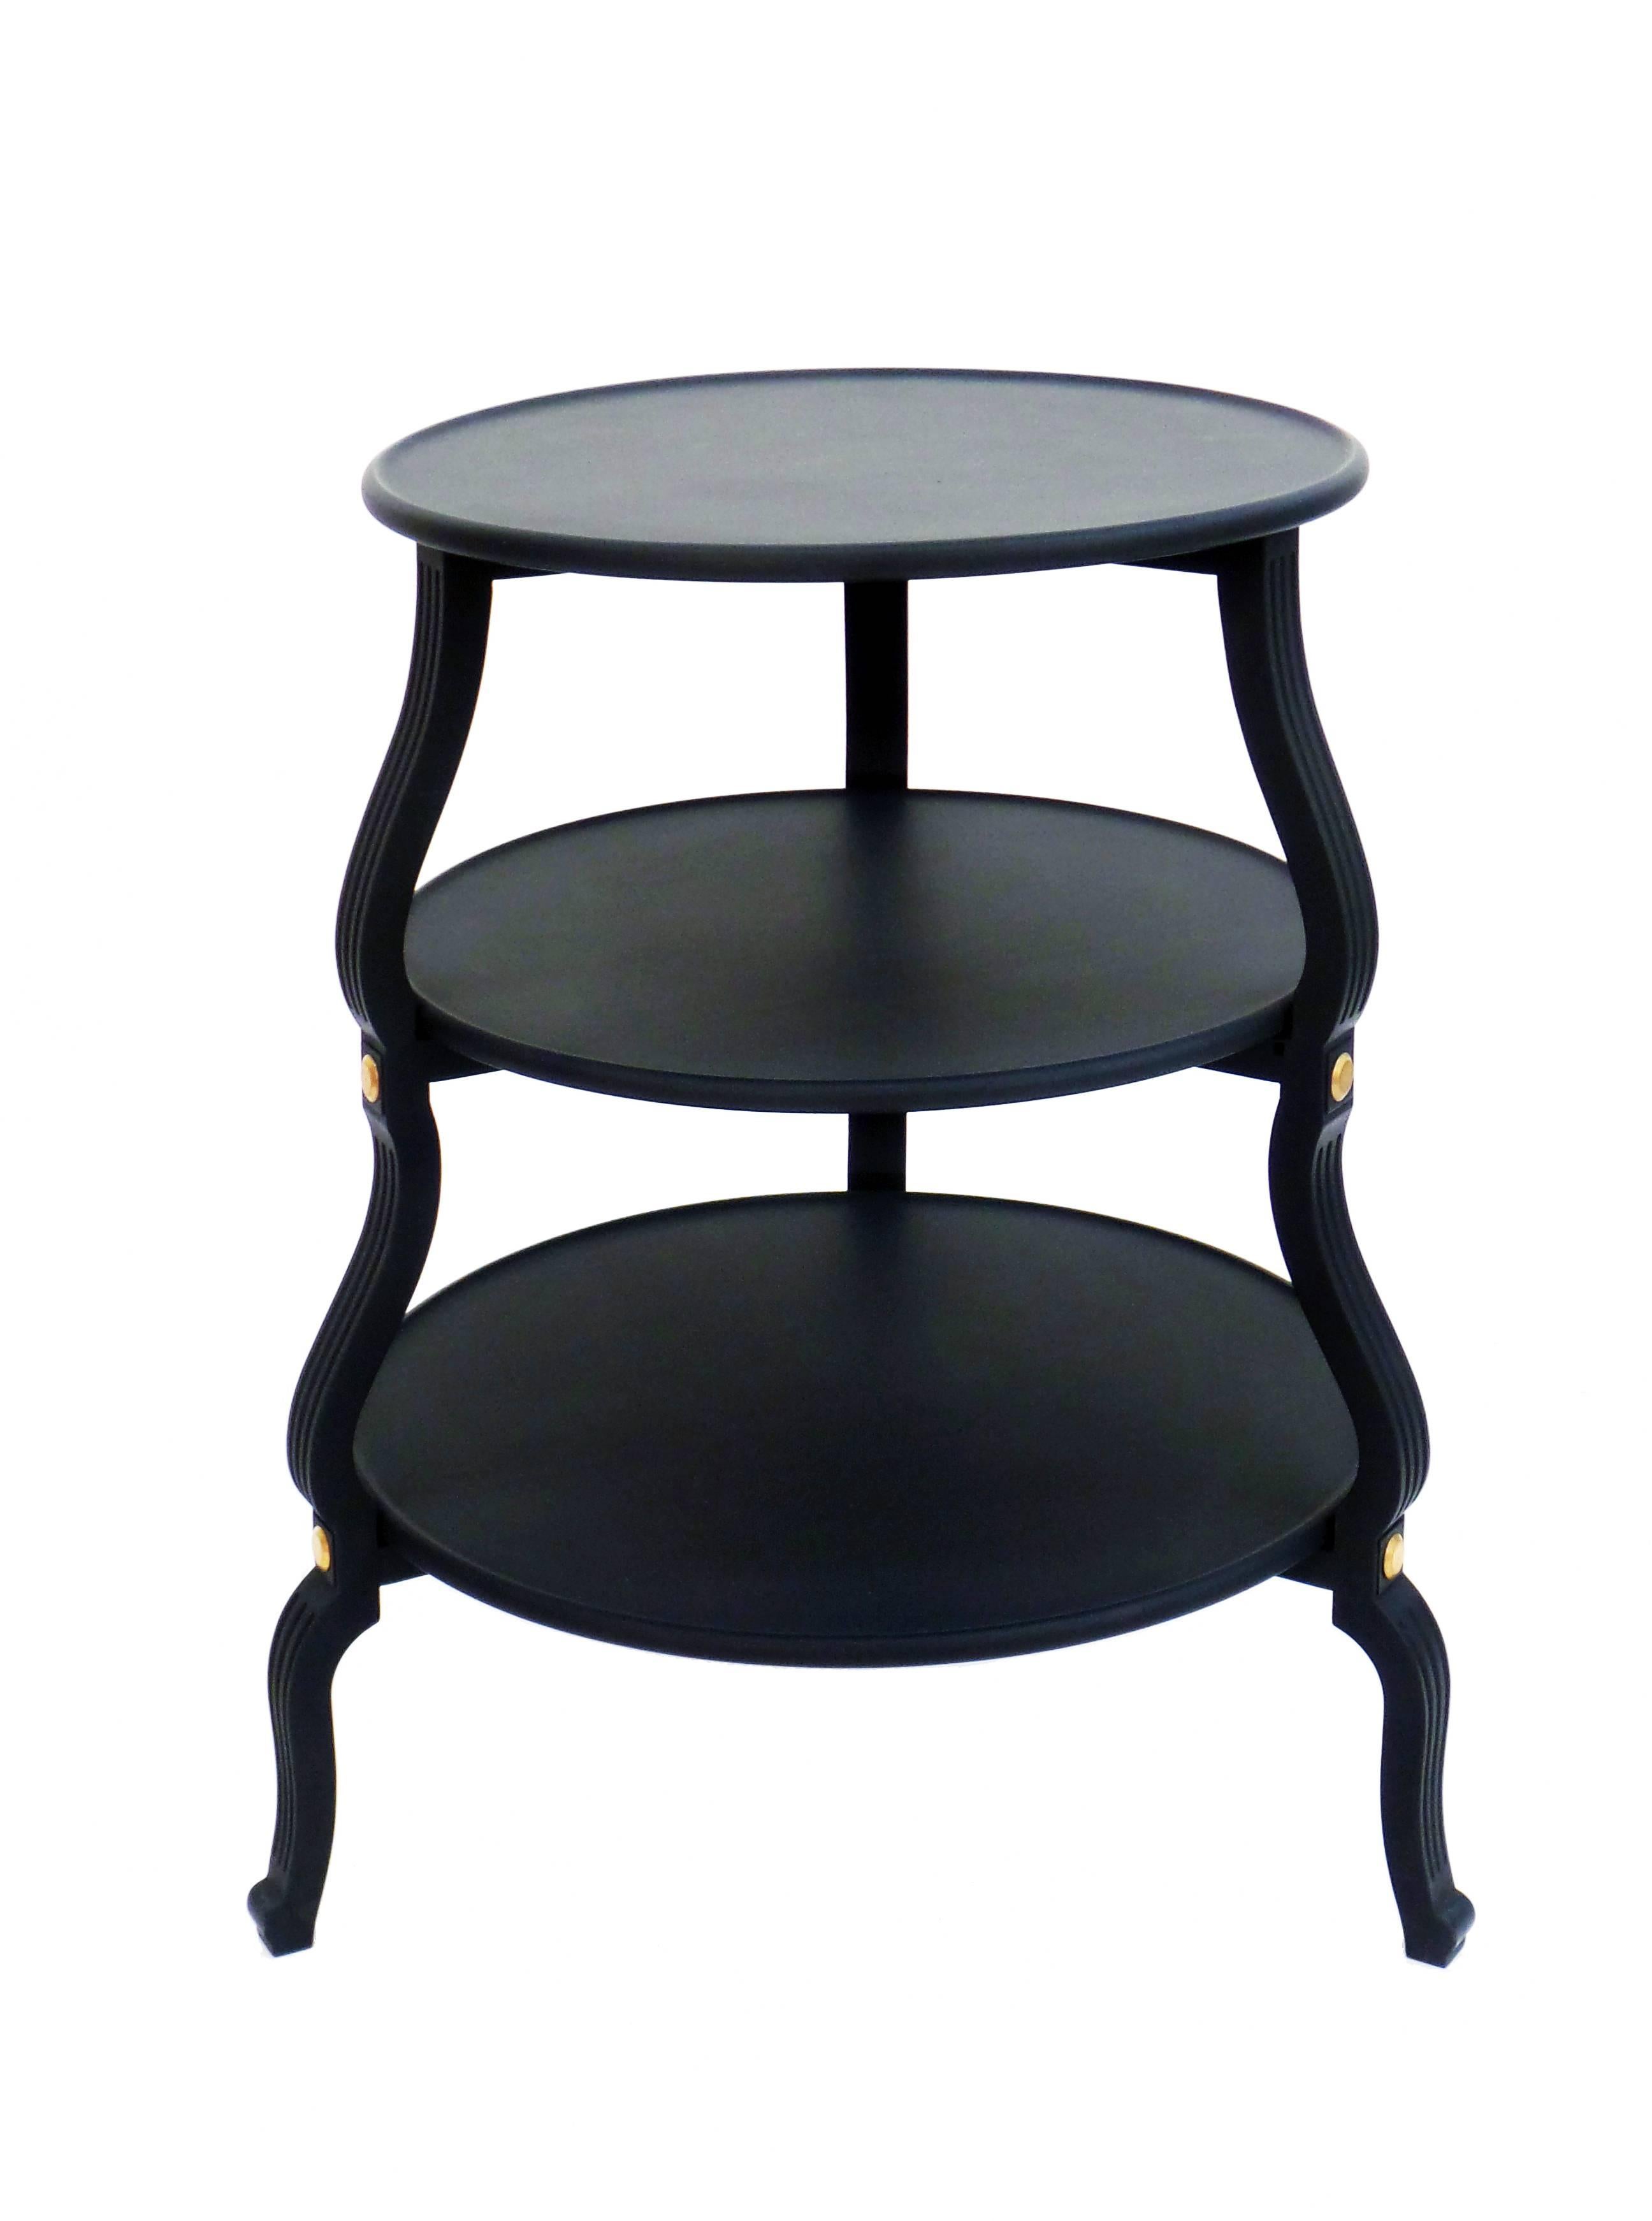 Modern Circular Three-Tier Table For Sale